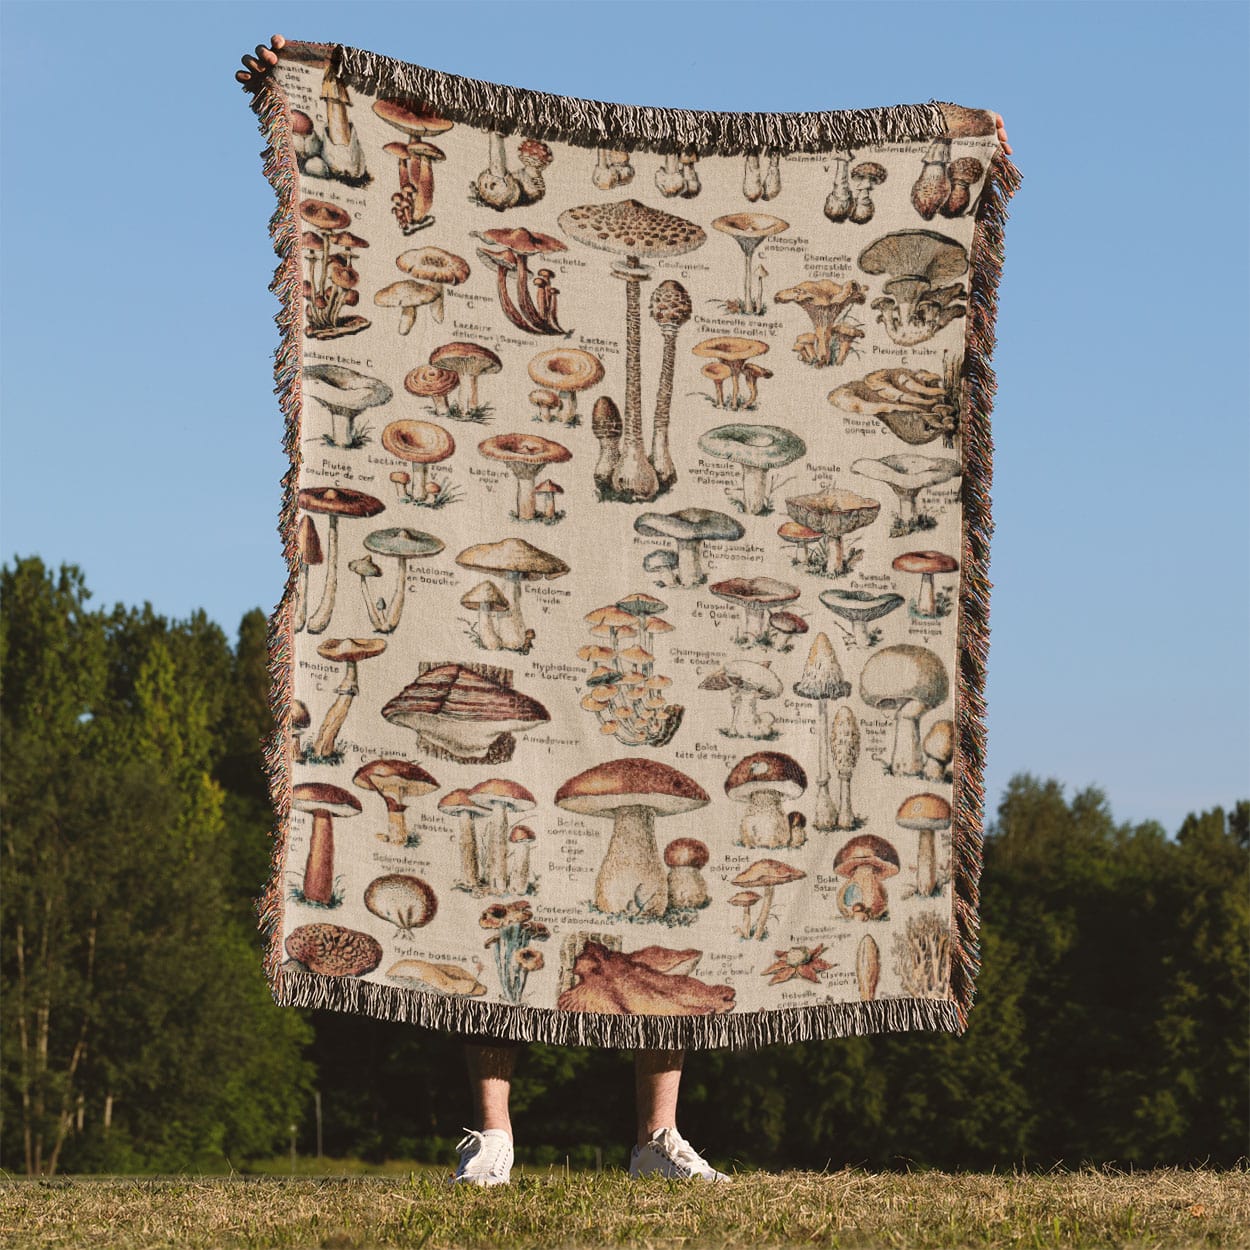 Mushroom Woven Blanket Held on a Woman's Back Outside